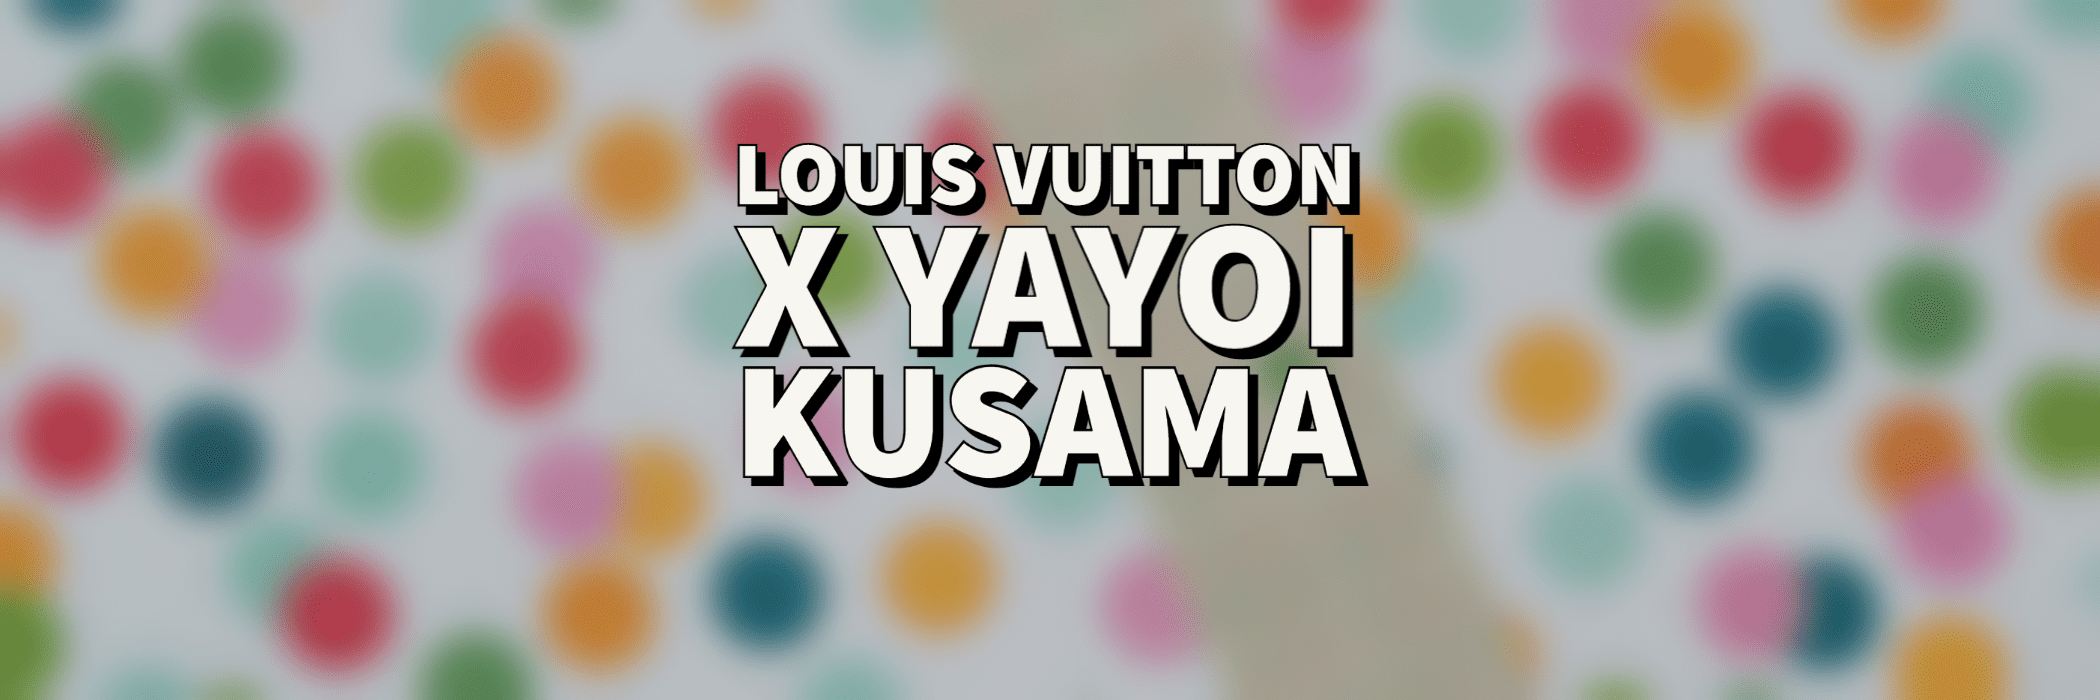 Louis Vuitton Celebrates 200th Anniversary with NFT Partnership featuring Yayoi Kusama: Correction False